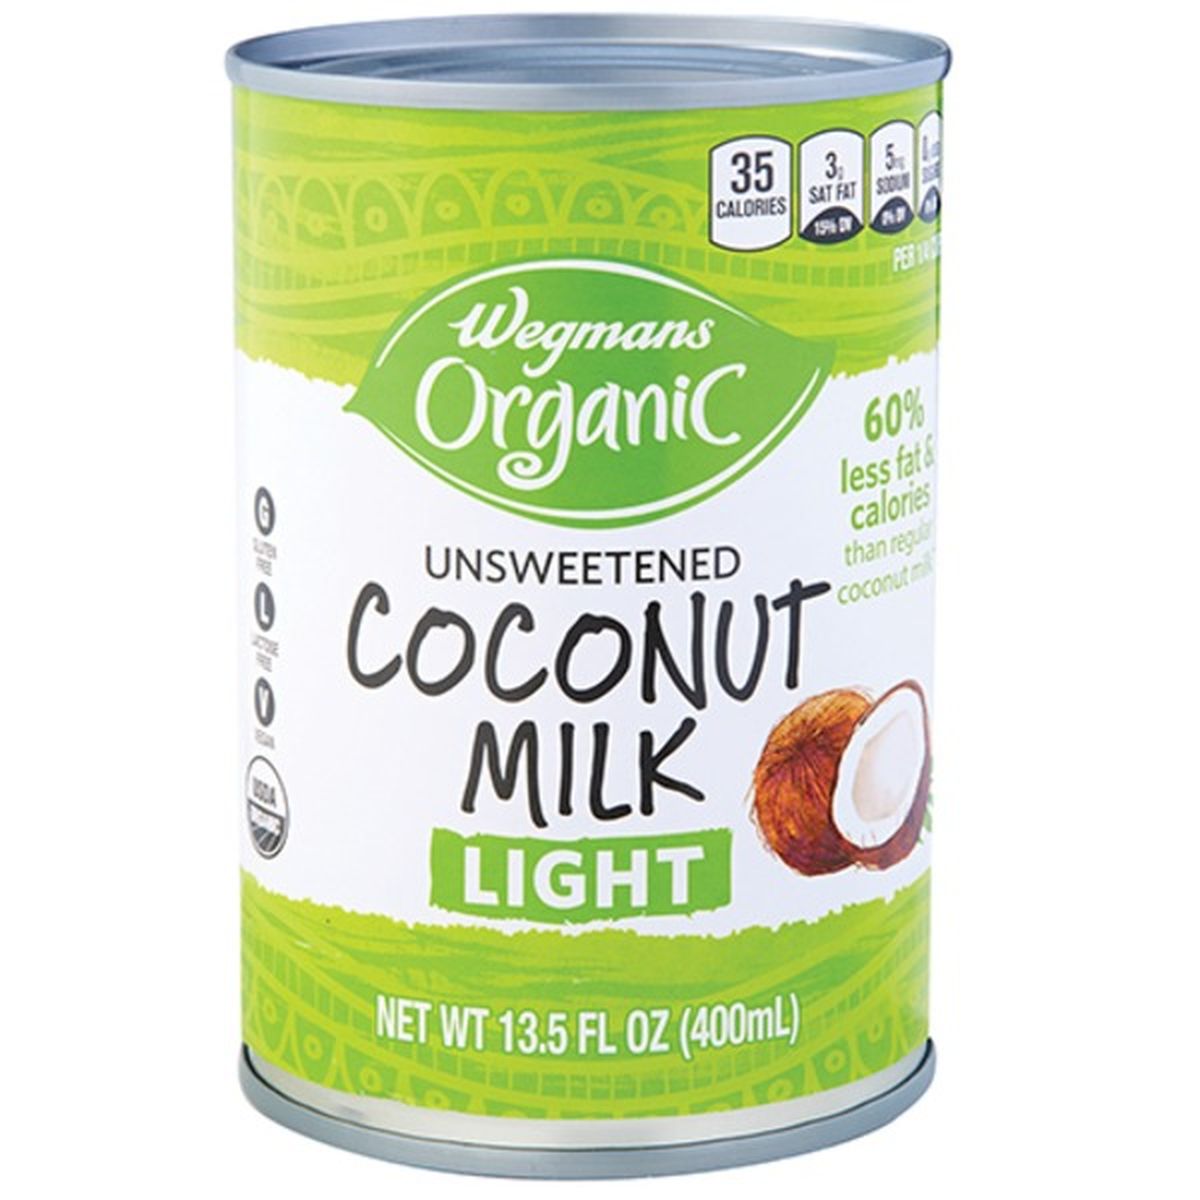 Calories in Wegmans Organic Unsweetened Coconut Milk, Light